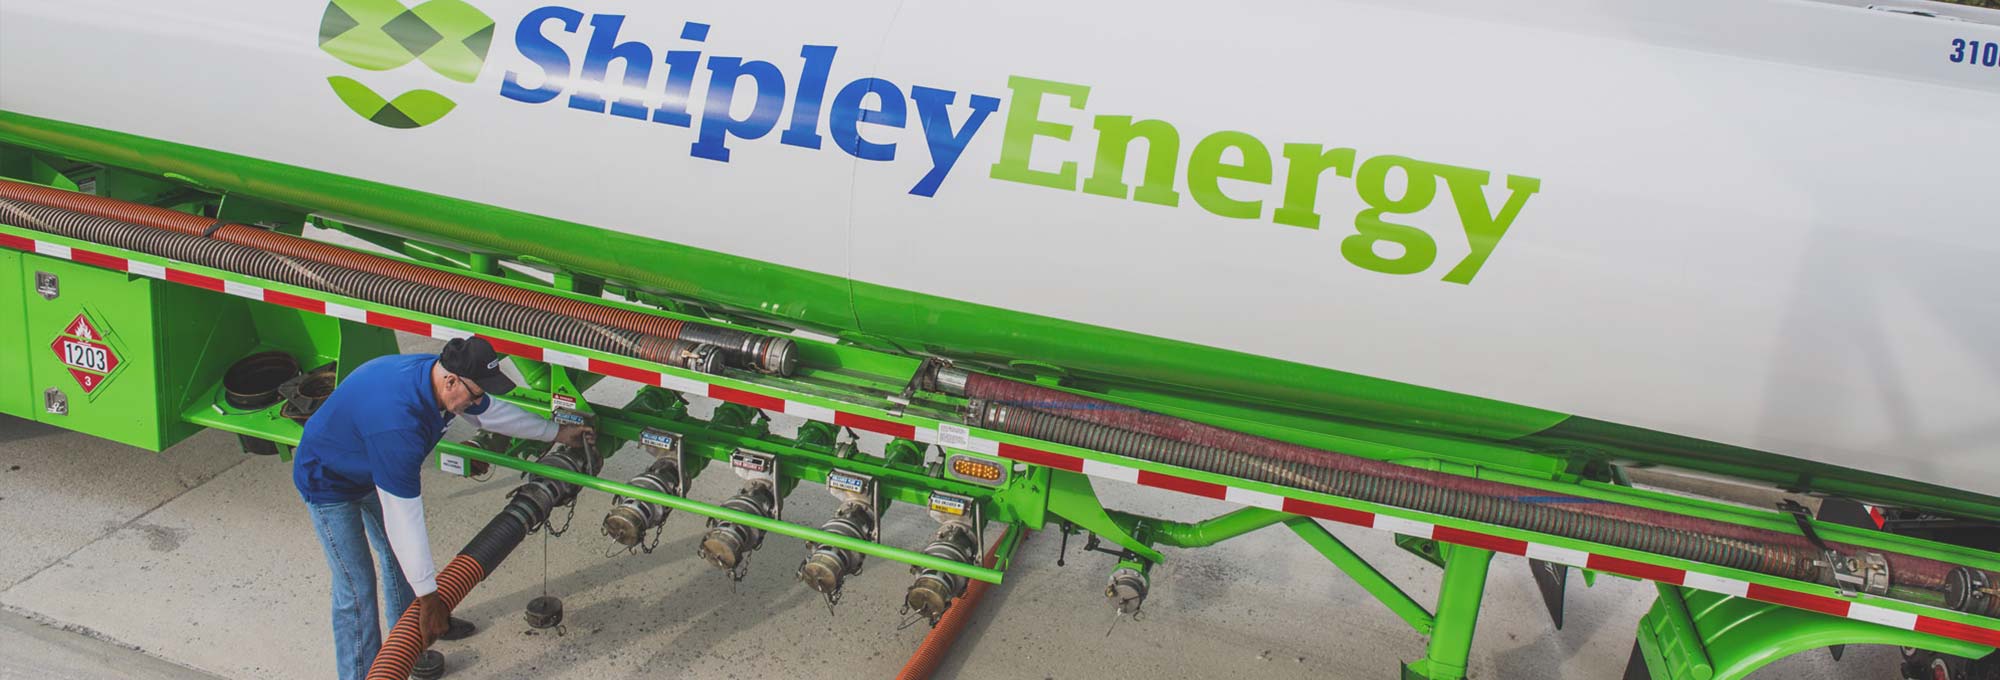 Why Trust Shipley Energy?